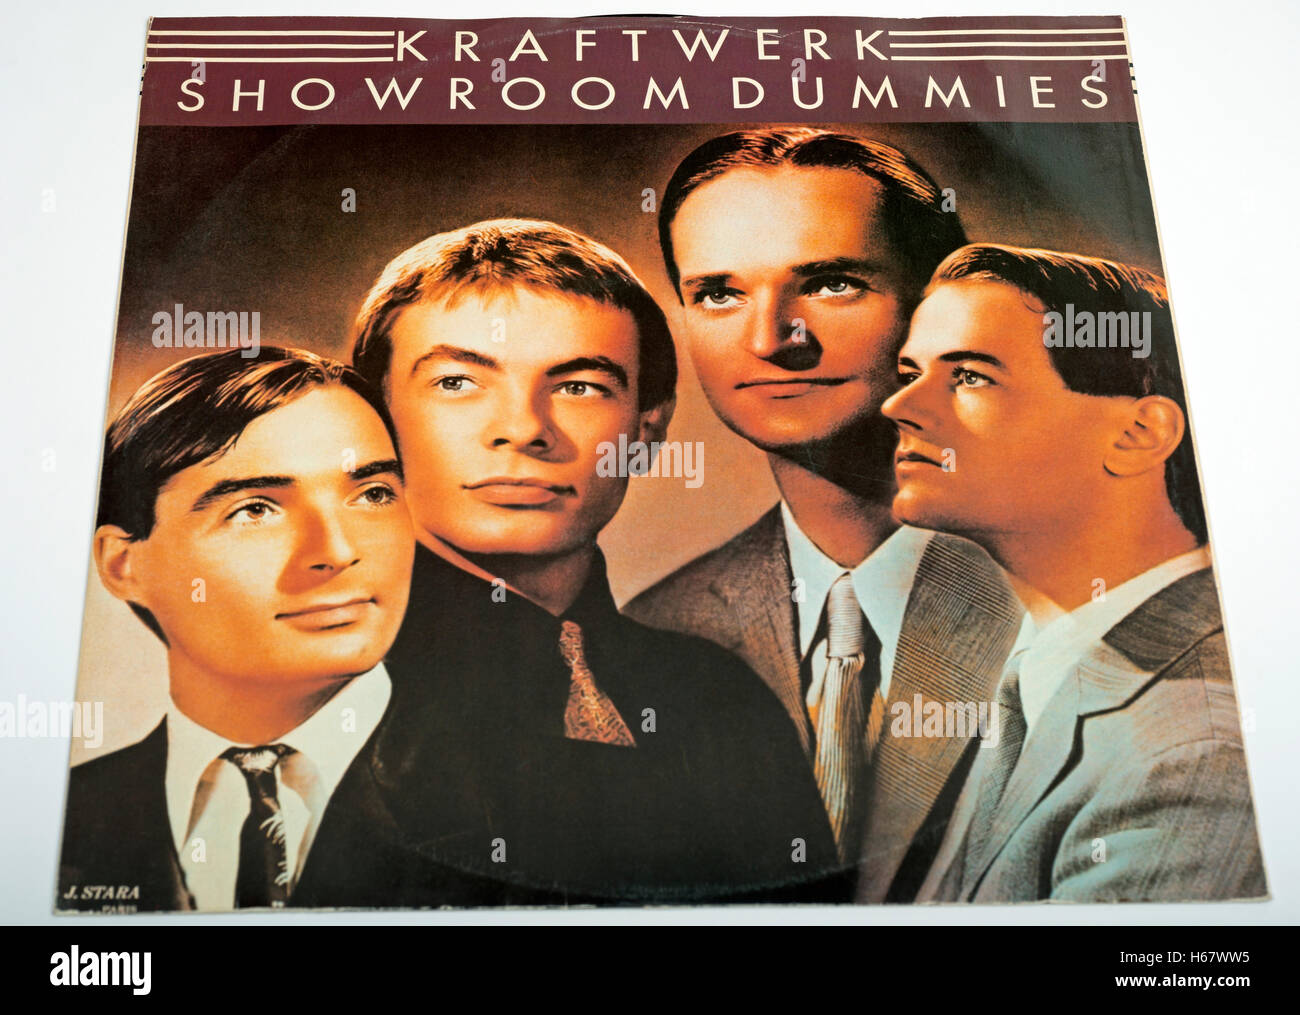 Showroom Dummies 12 pollici singolo dal tedesco elettro-pop band Kraftwerk Foto Stock